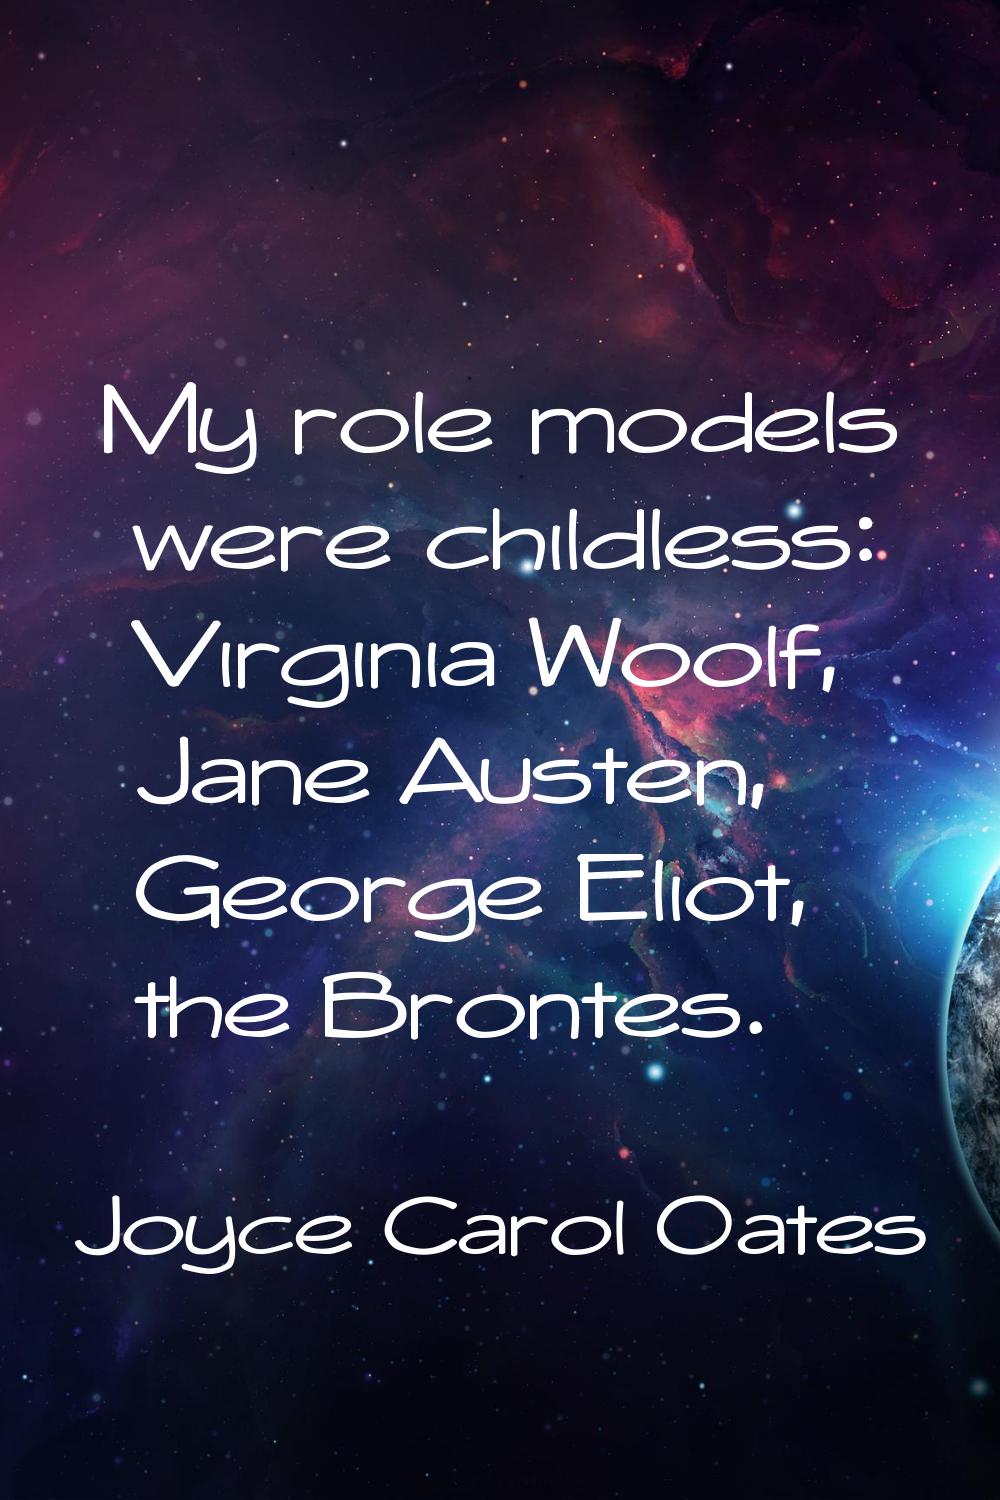 My role models were childless: Virginia Woolf, Jane Austen, George Eliot, the Brontes.